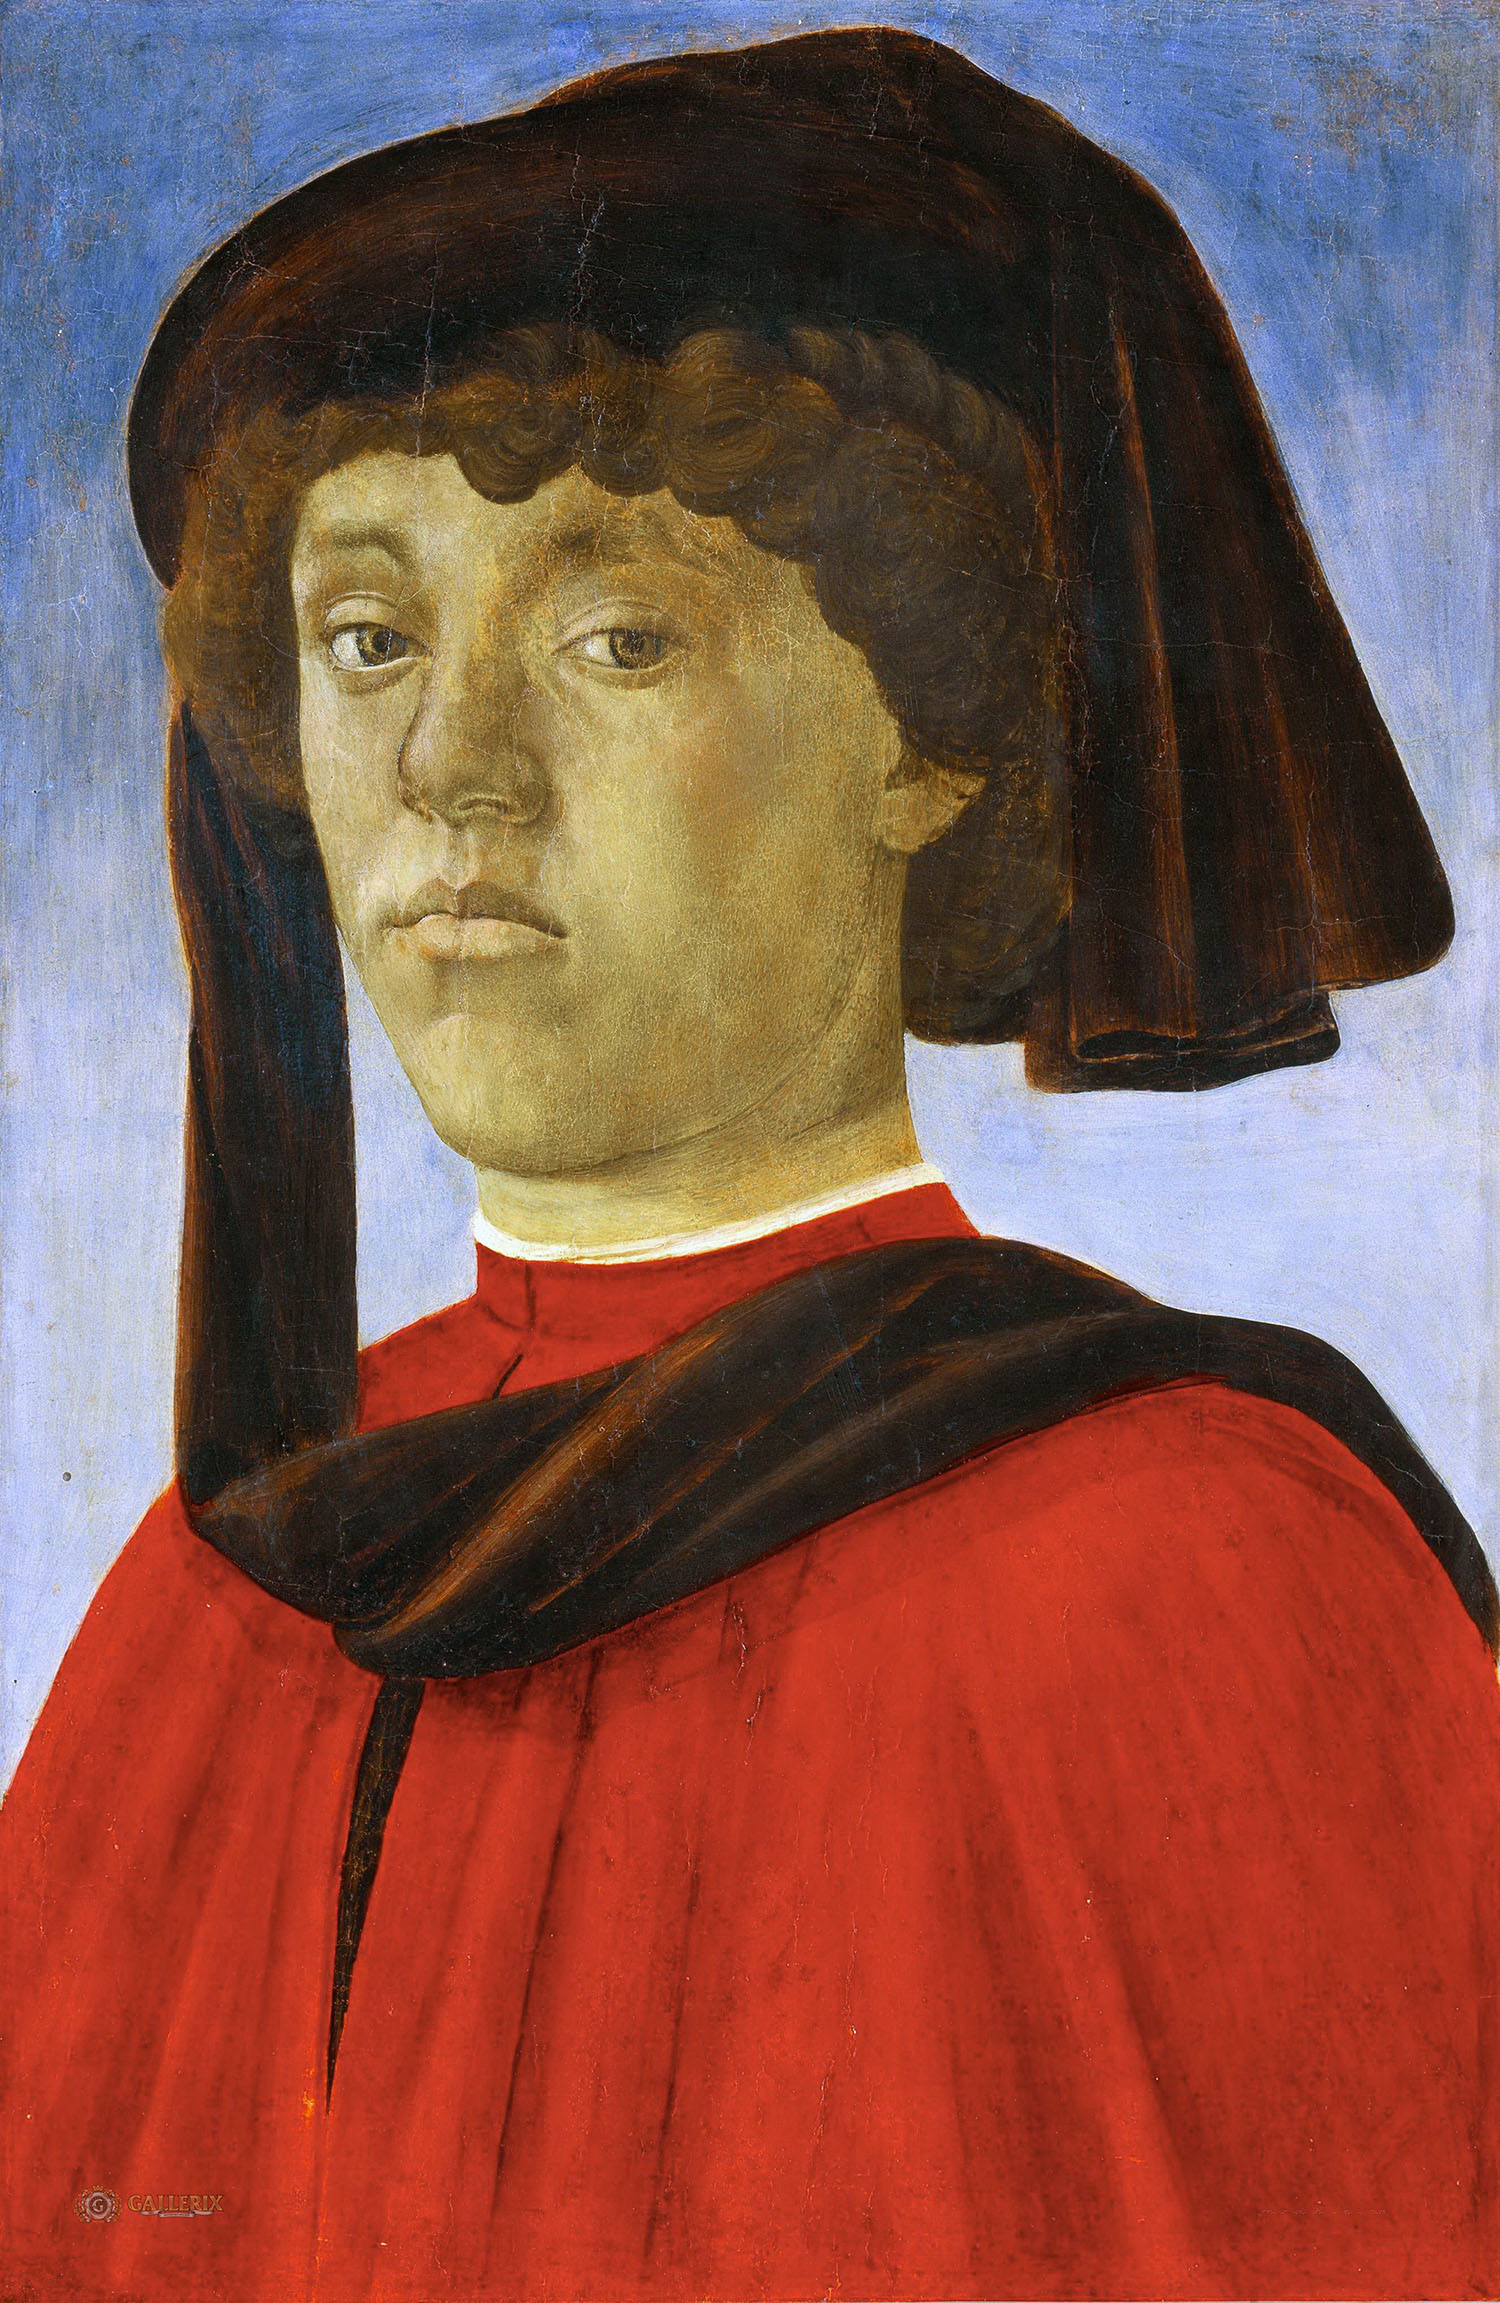 Сандро Боттичелли. "Портрет молодого человека". Около 1469. Палаццо Питти, Флоренция.